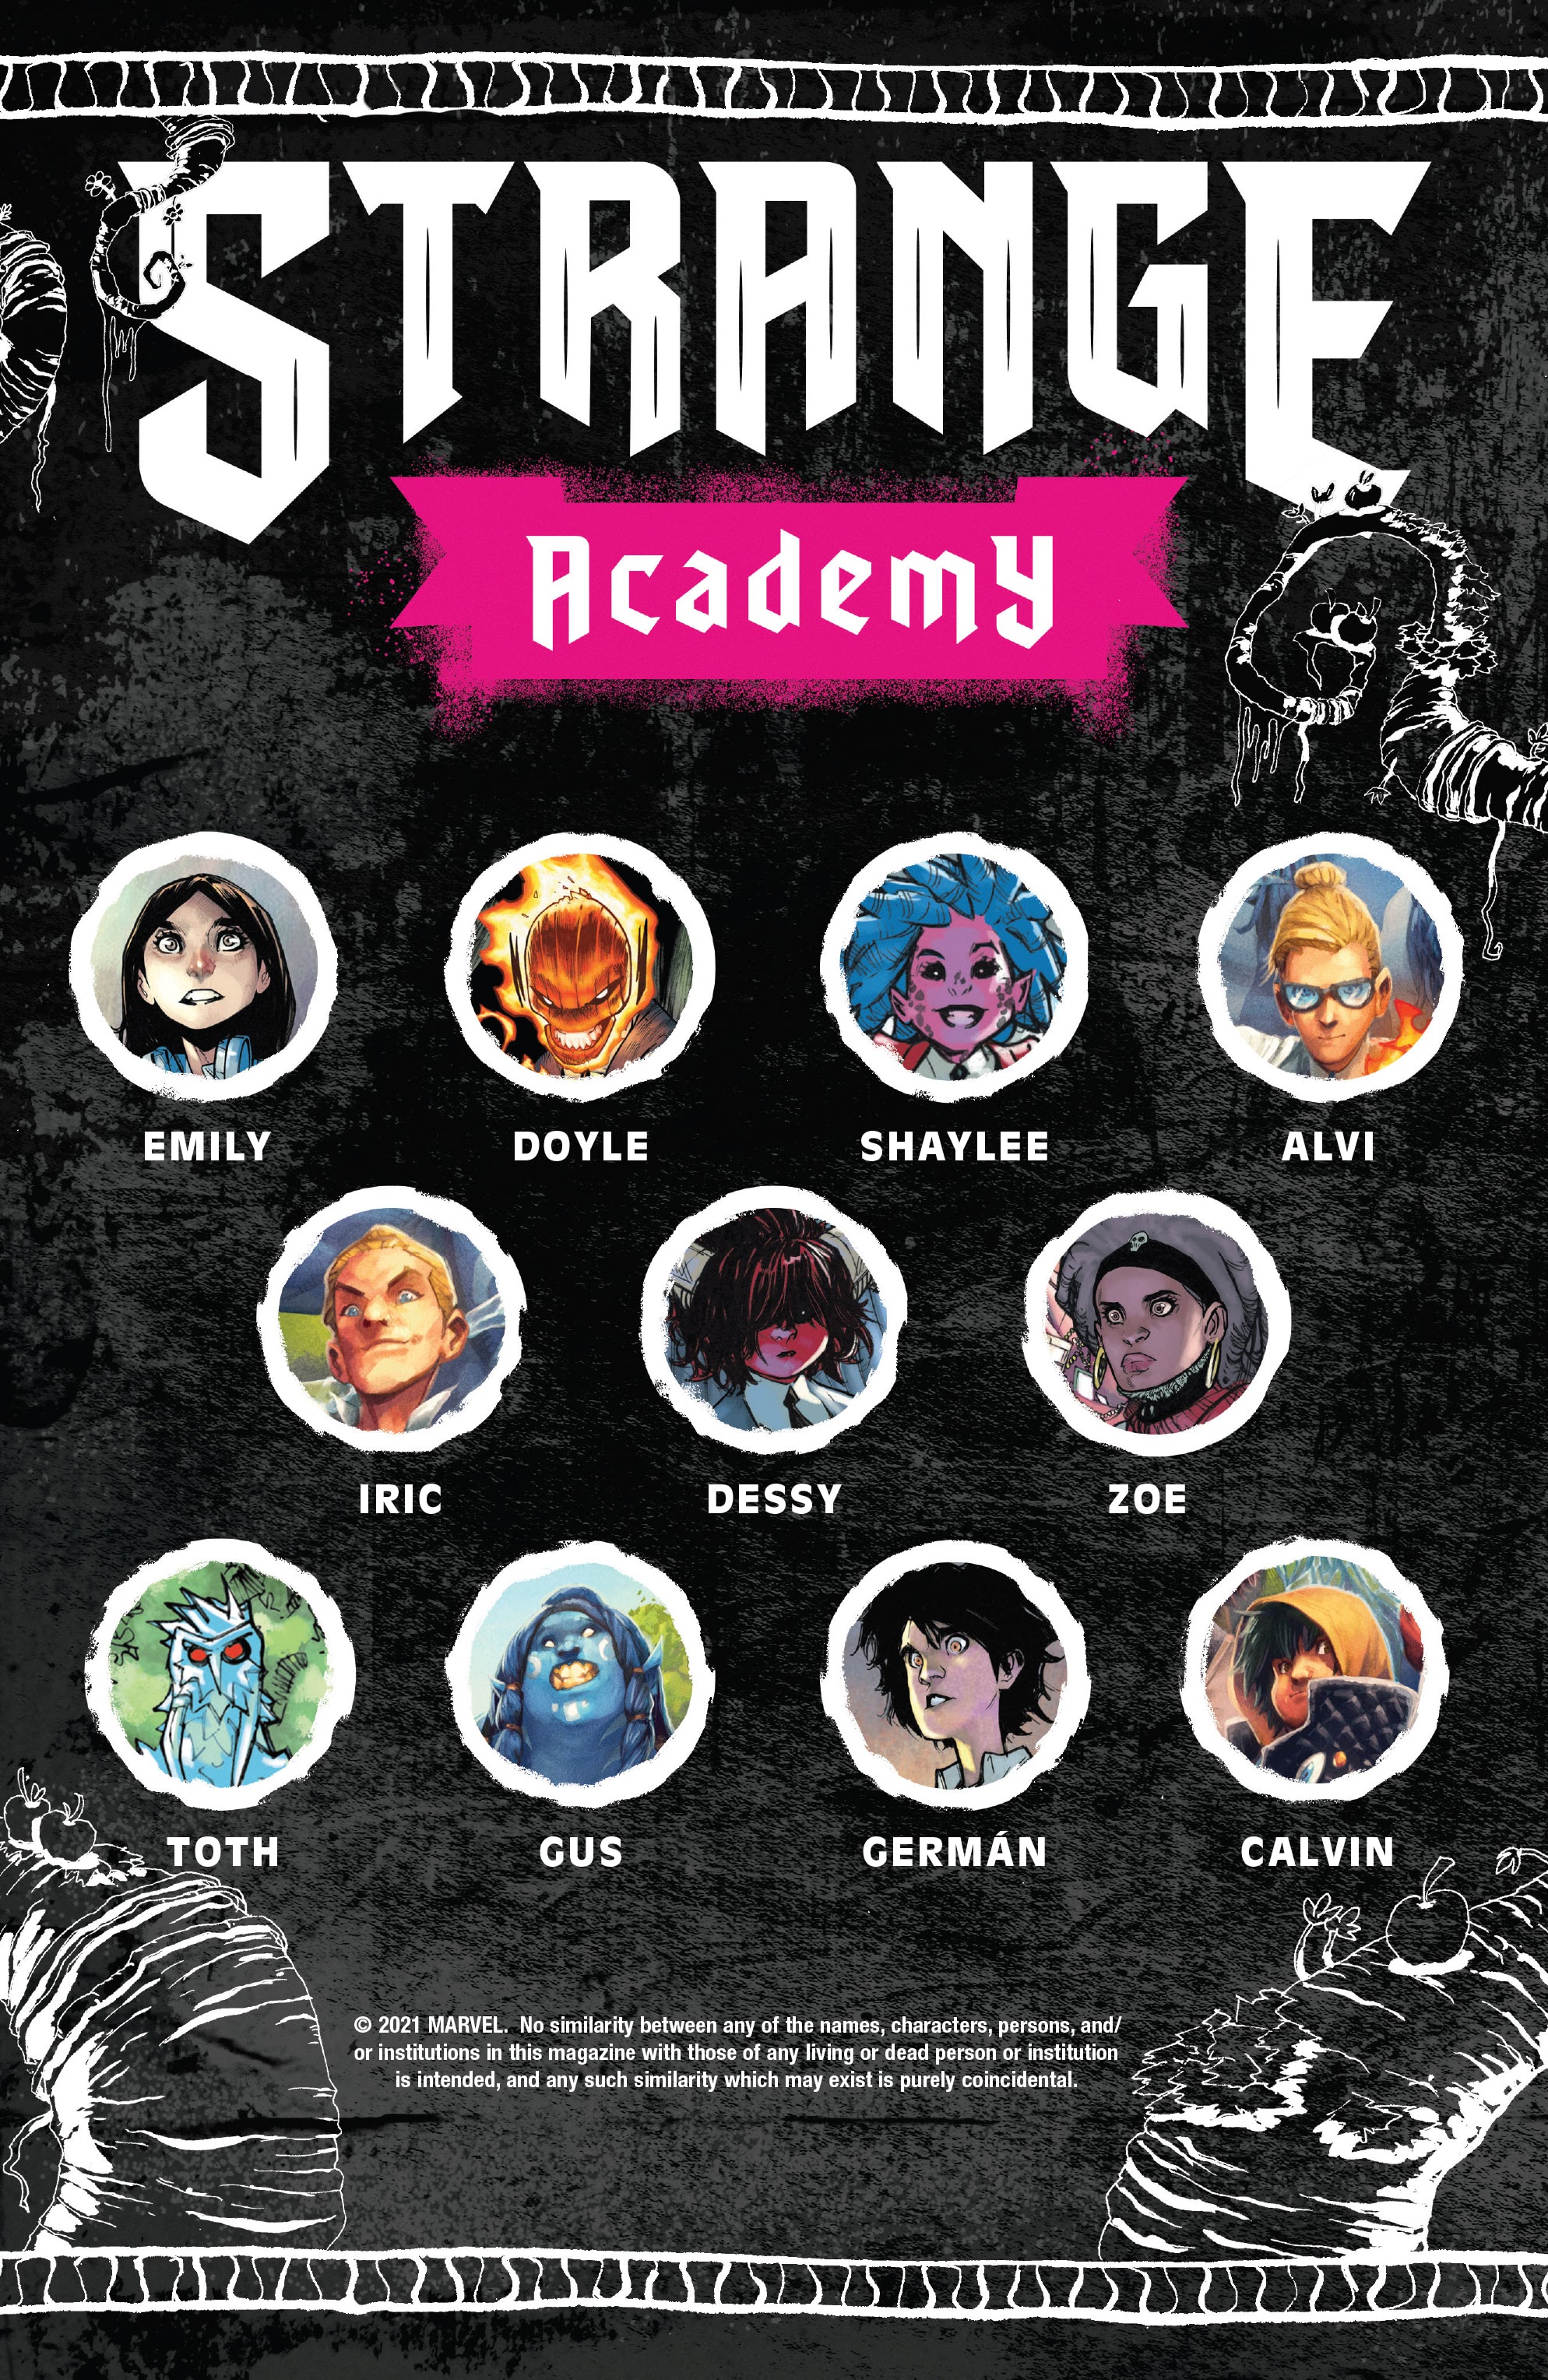 Read online Strange Academy comic -  Issue #15 - 3